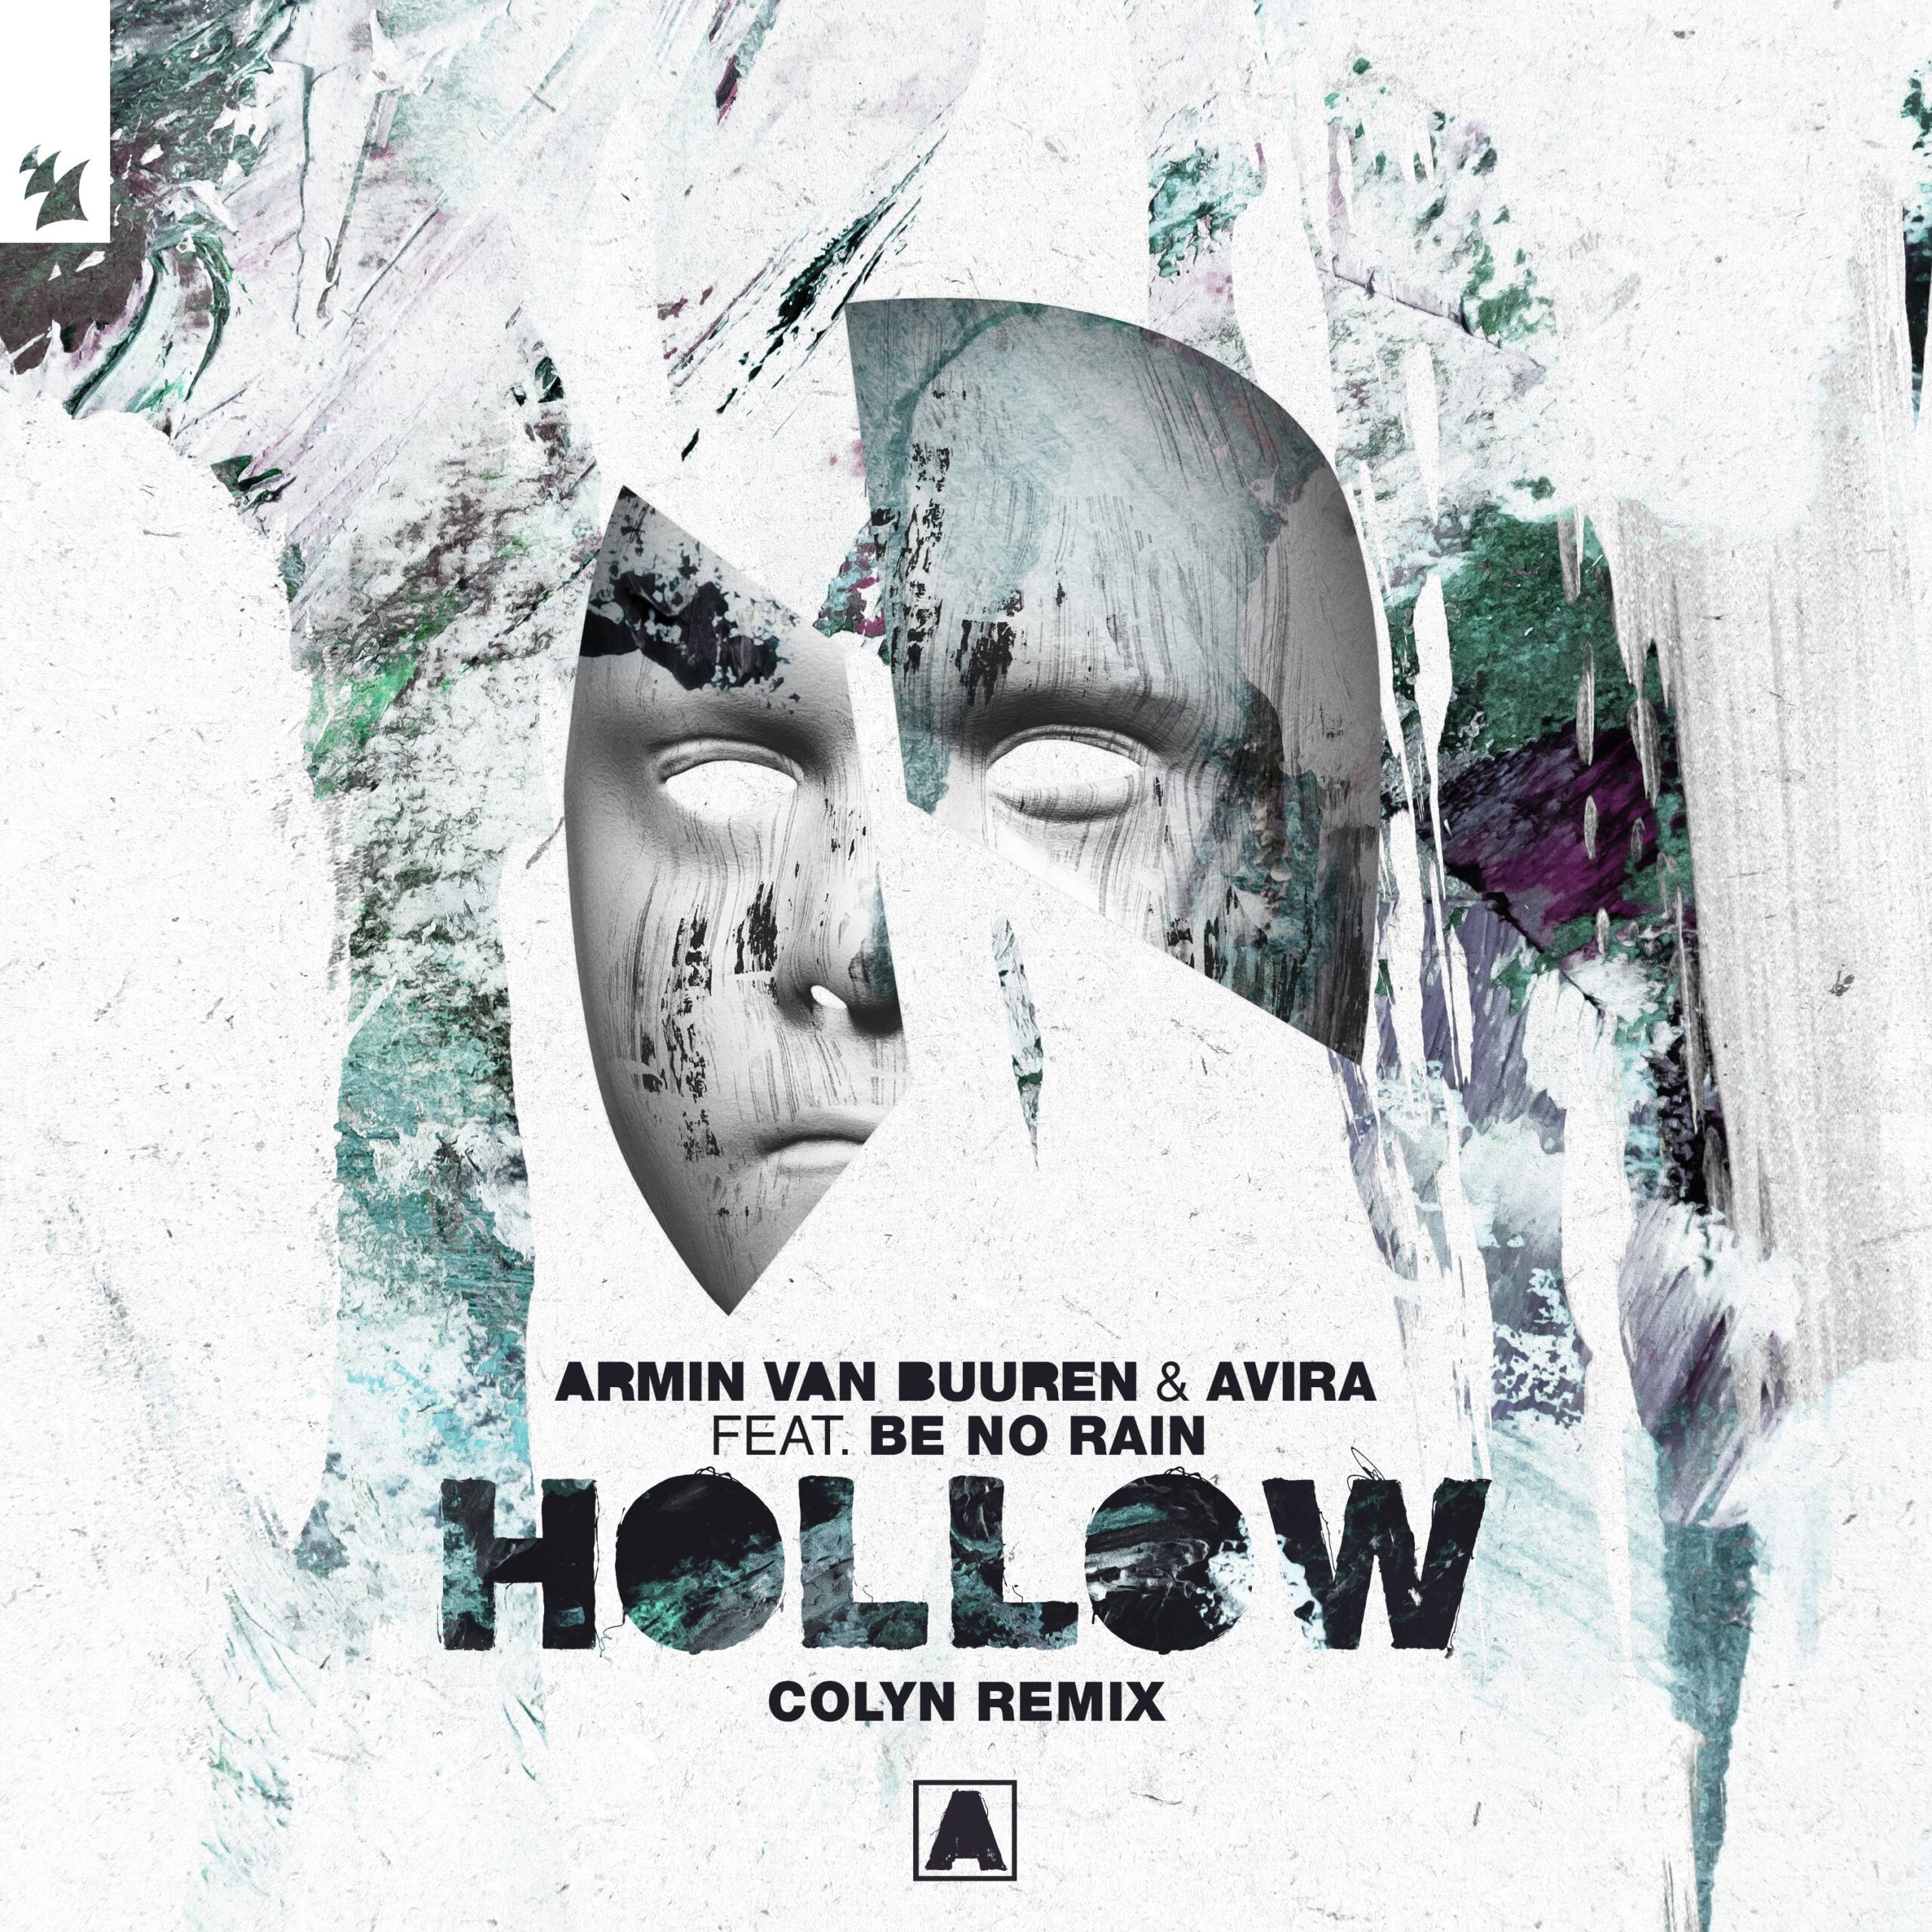 Armin van Buuren and AVIRA feat. Be No Rain presents Hollow (Colyn Remix) on Armada Music